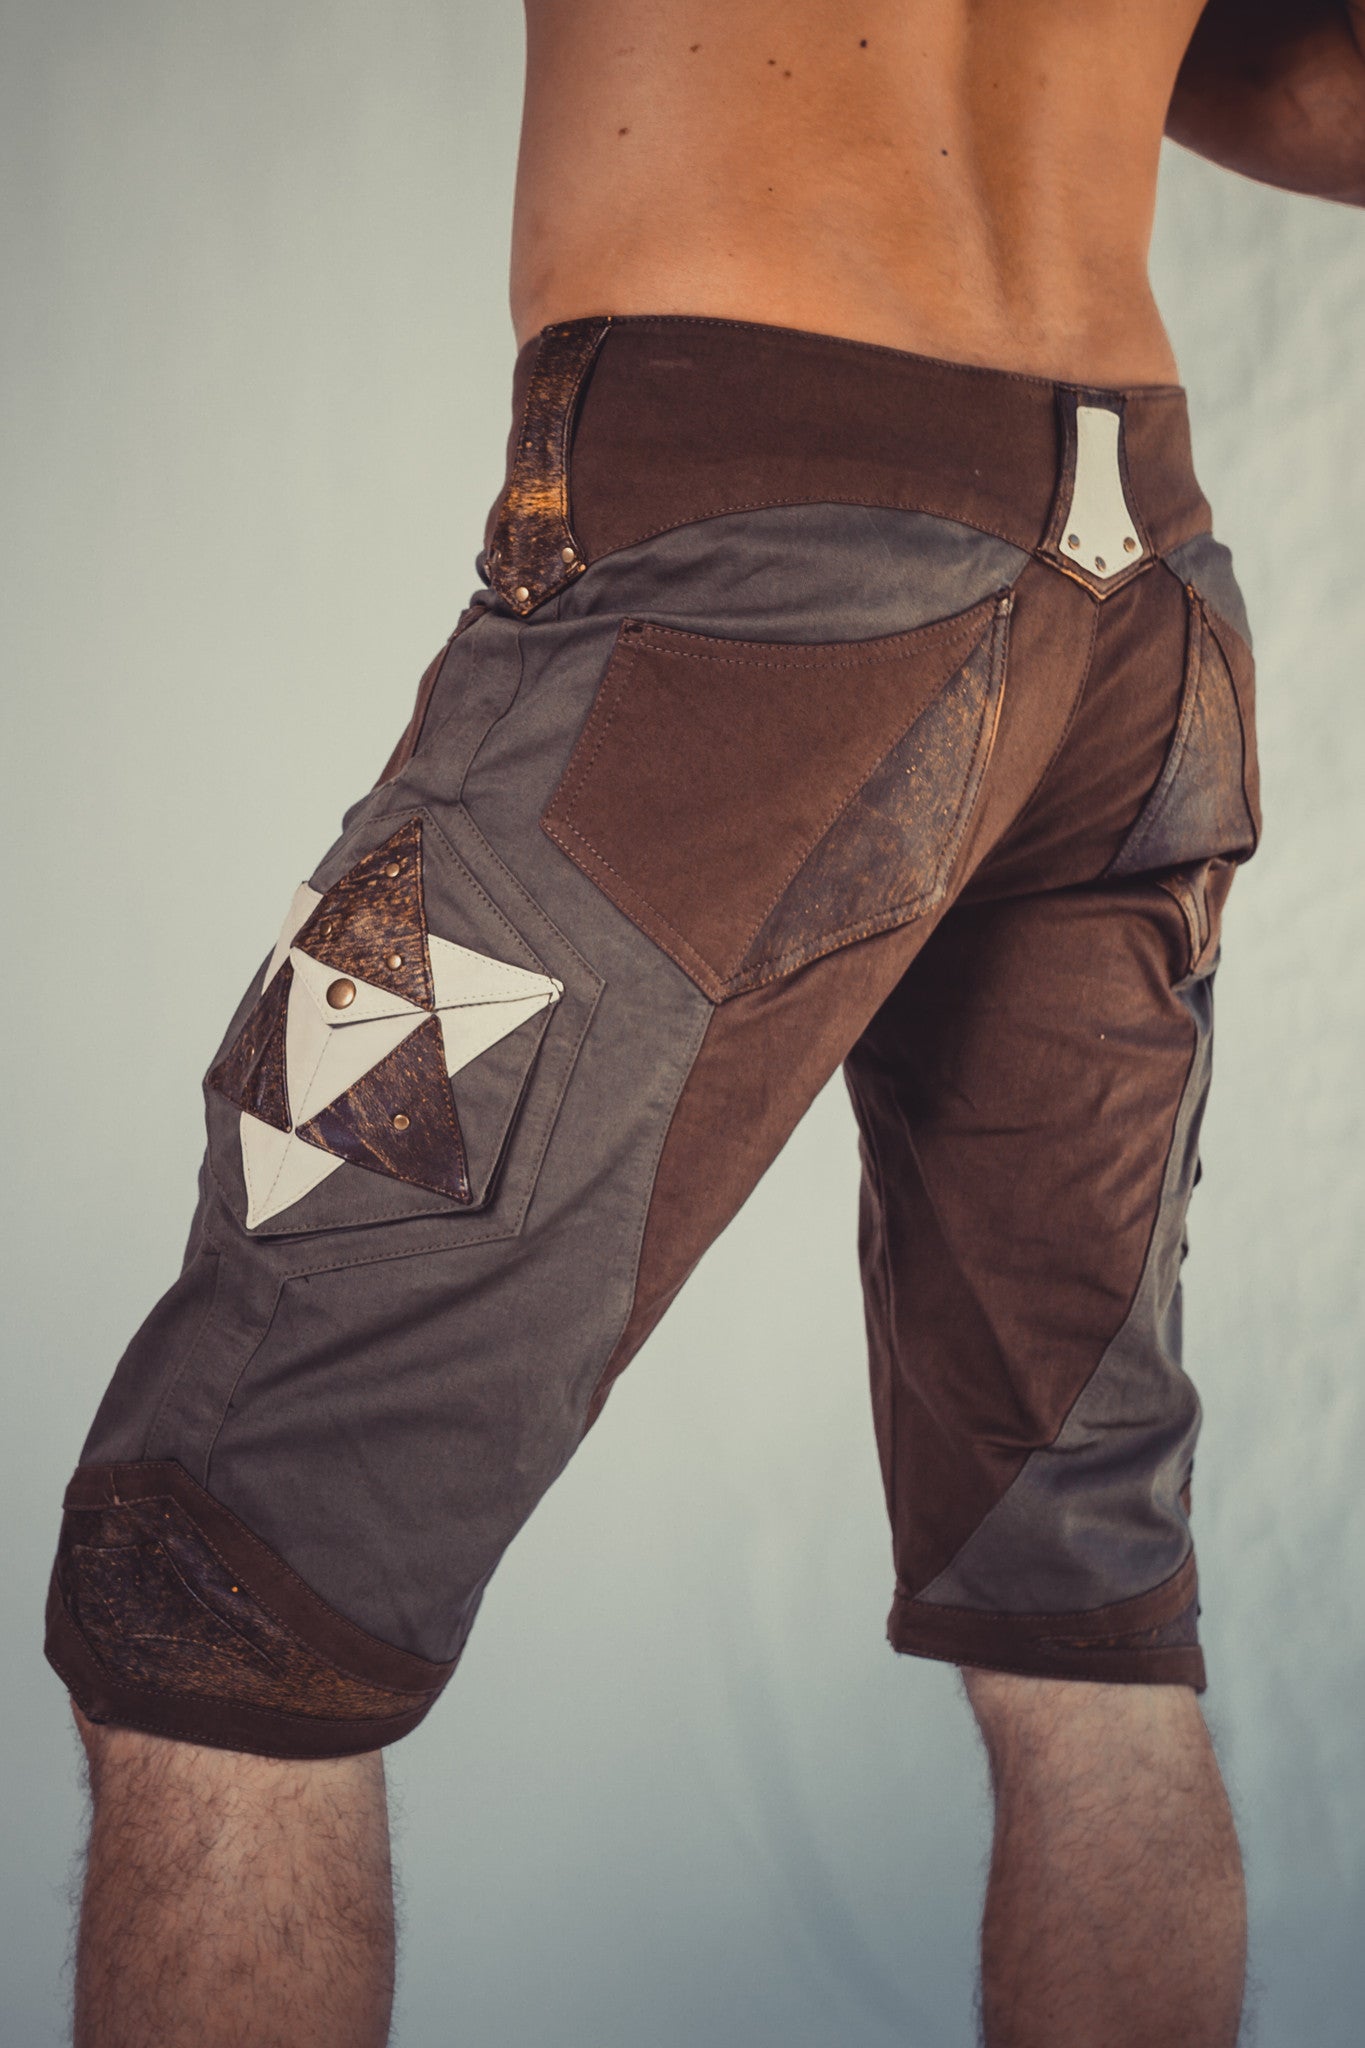 Hexa Shorts - anahata designs/infiniti now